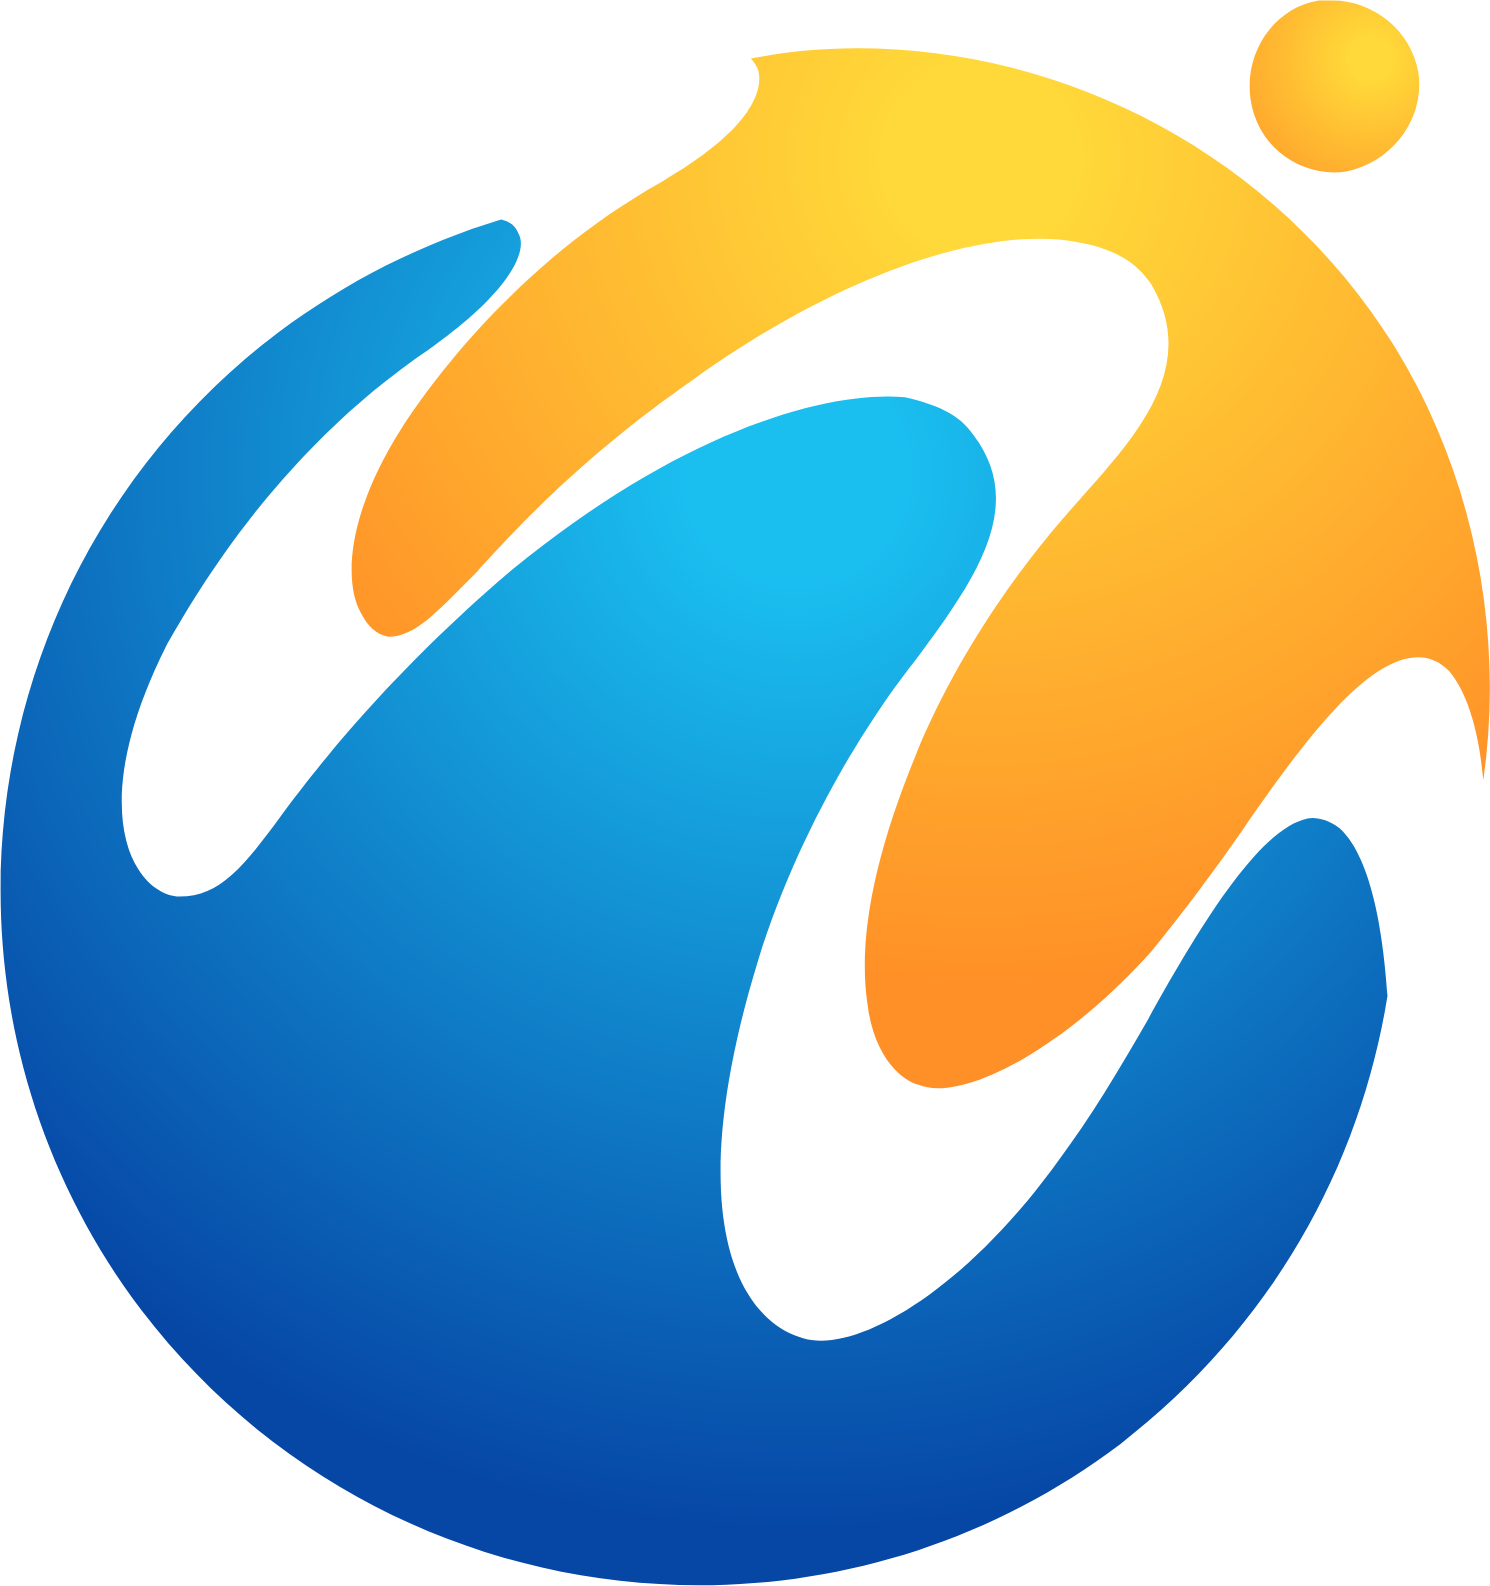 World Holdings logo (PNG transparent)